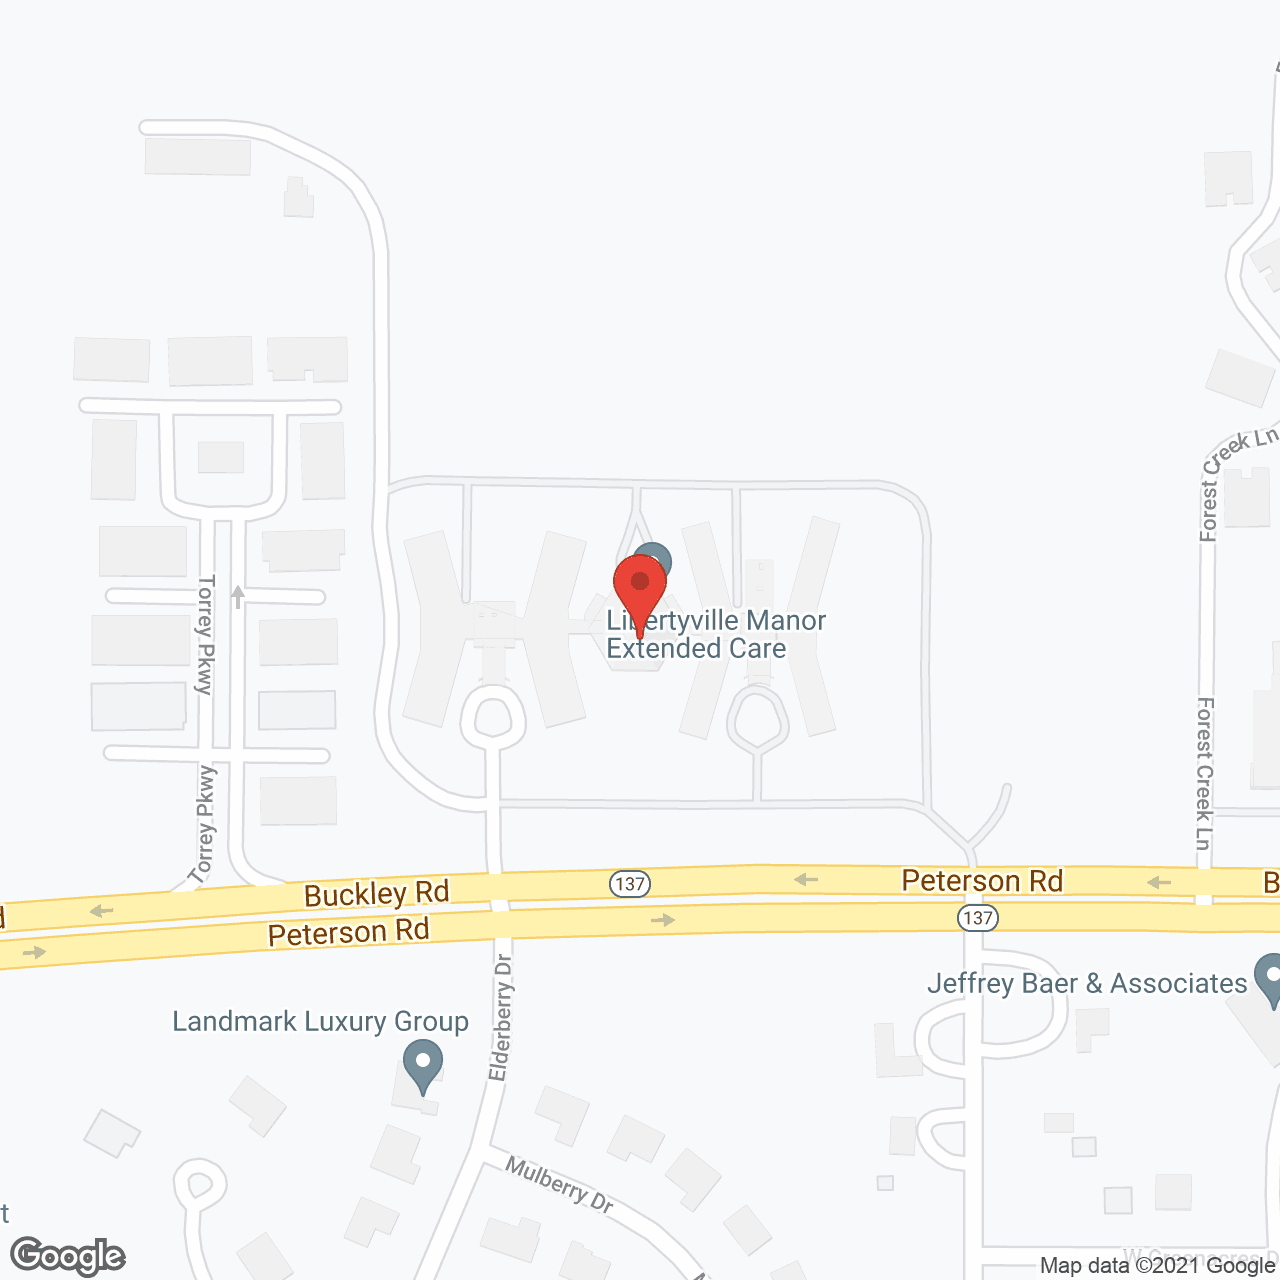 Libertyville Manor in google map